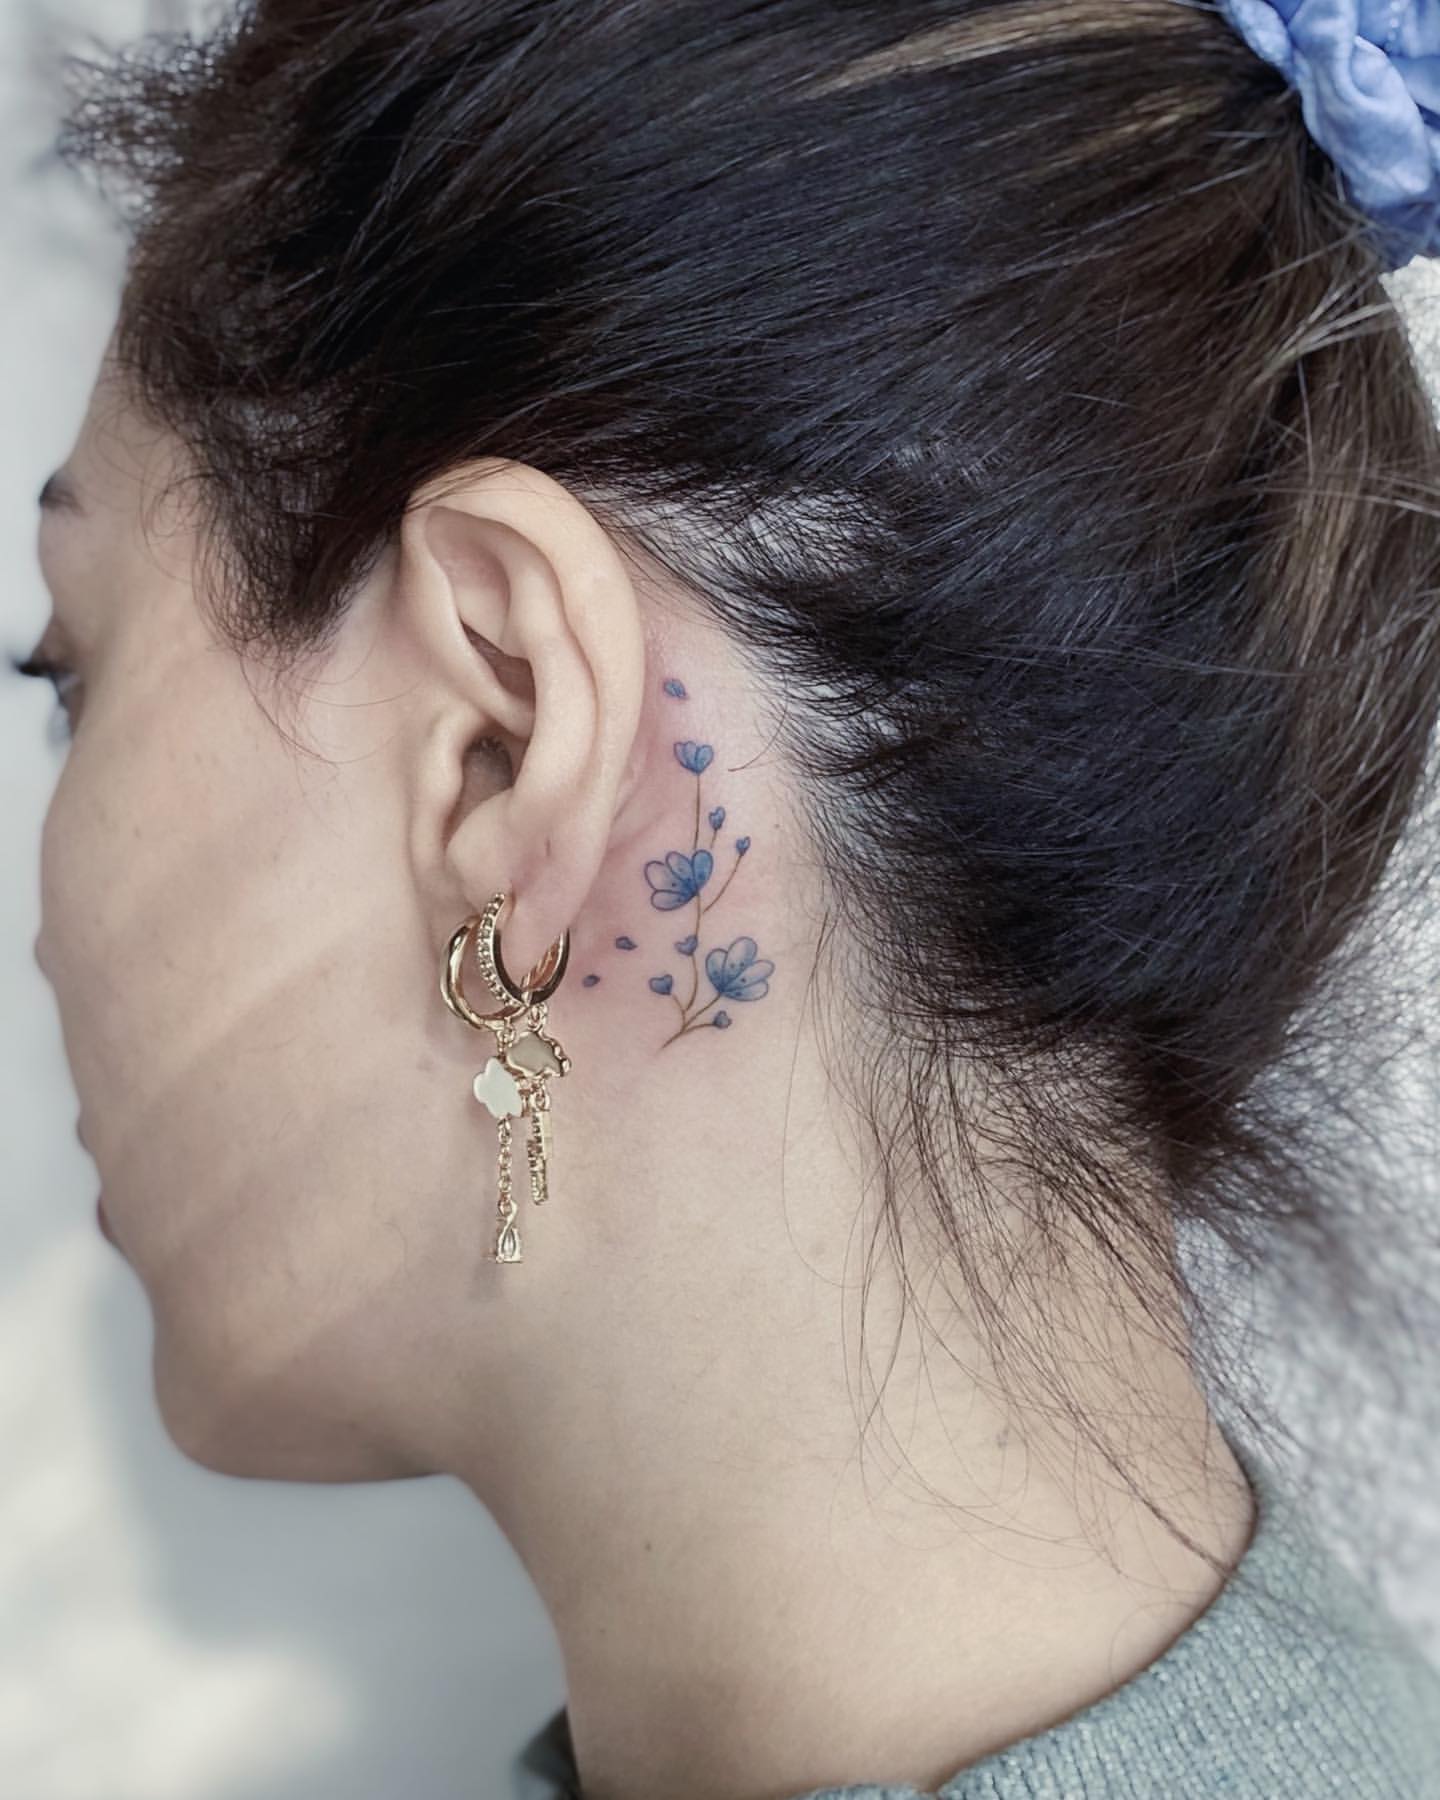 Behind the Ear Tattoos 6